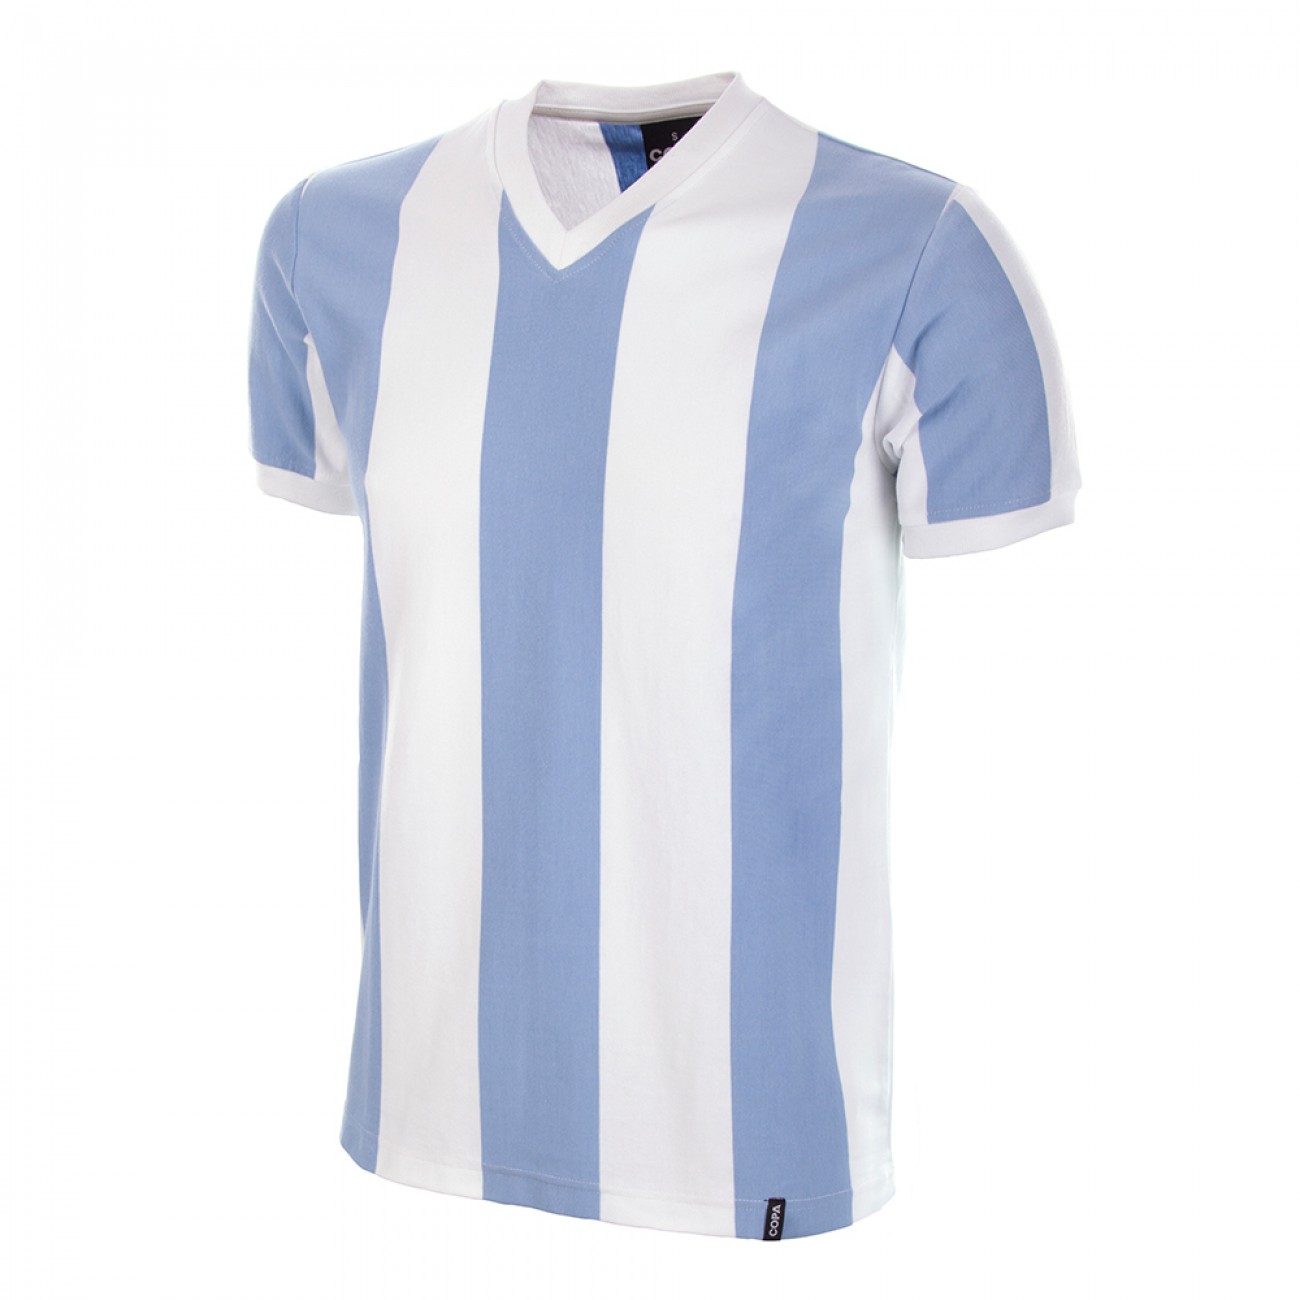 http://www.retrofootball.es/ropa-de-futbol/camiseta-argentina-a-os-60.html